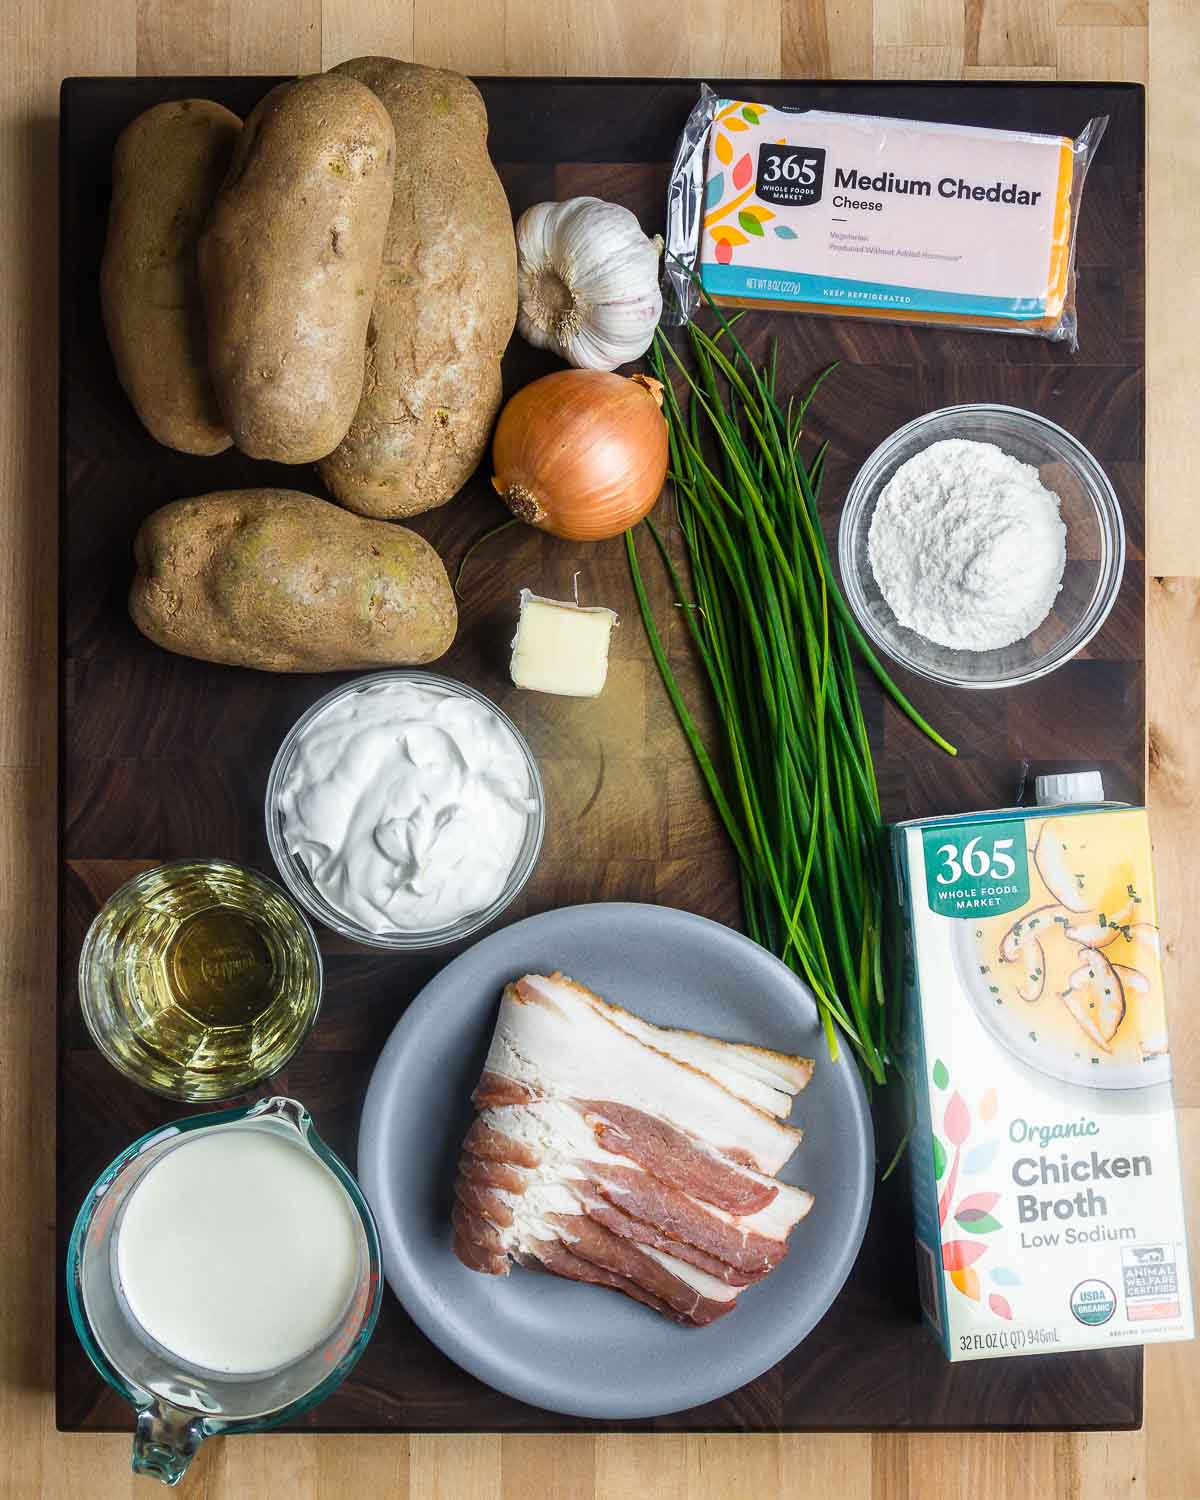 Ingredients shown: potatoes, garlic, onion, cheddar cheese, scallions, flour, wine, sour cream, bacon, cream, and chicken broth.